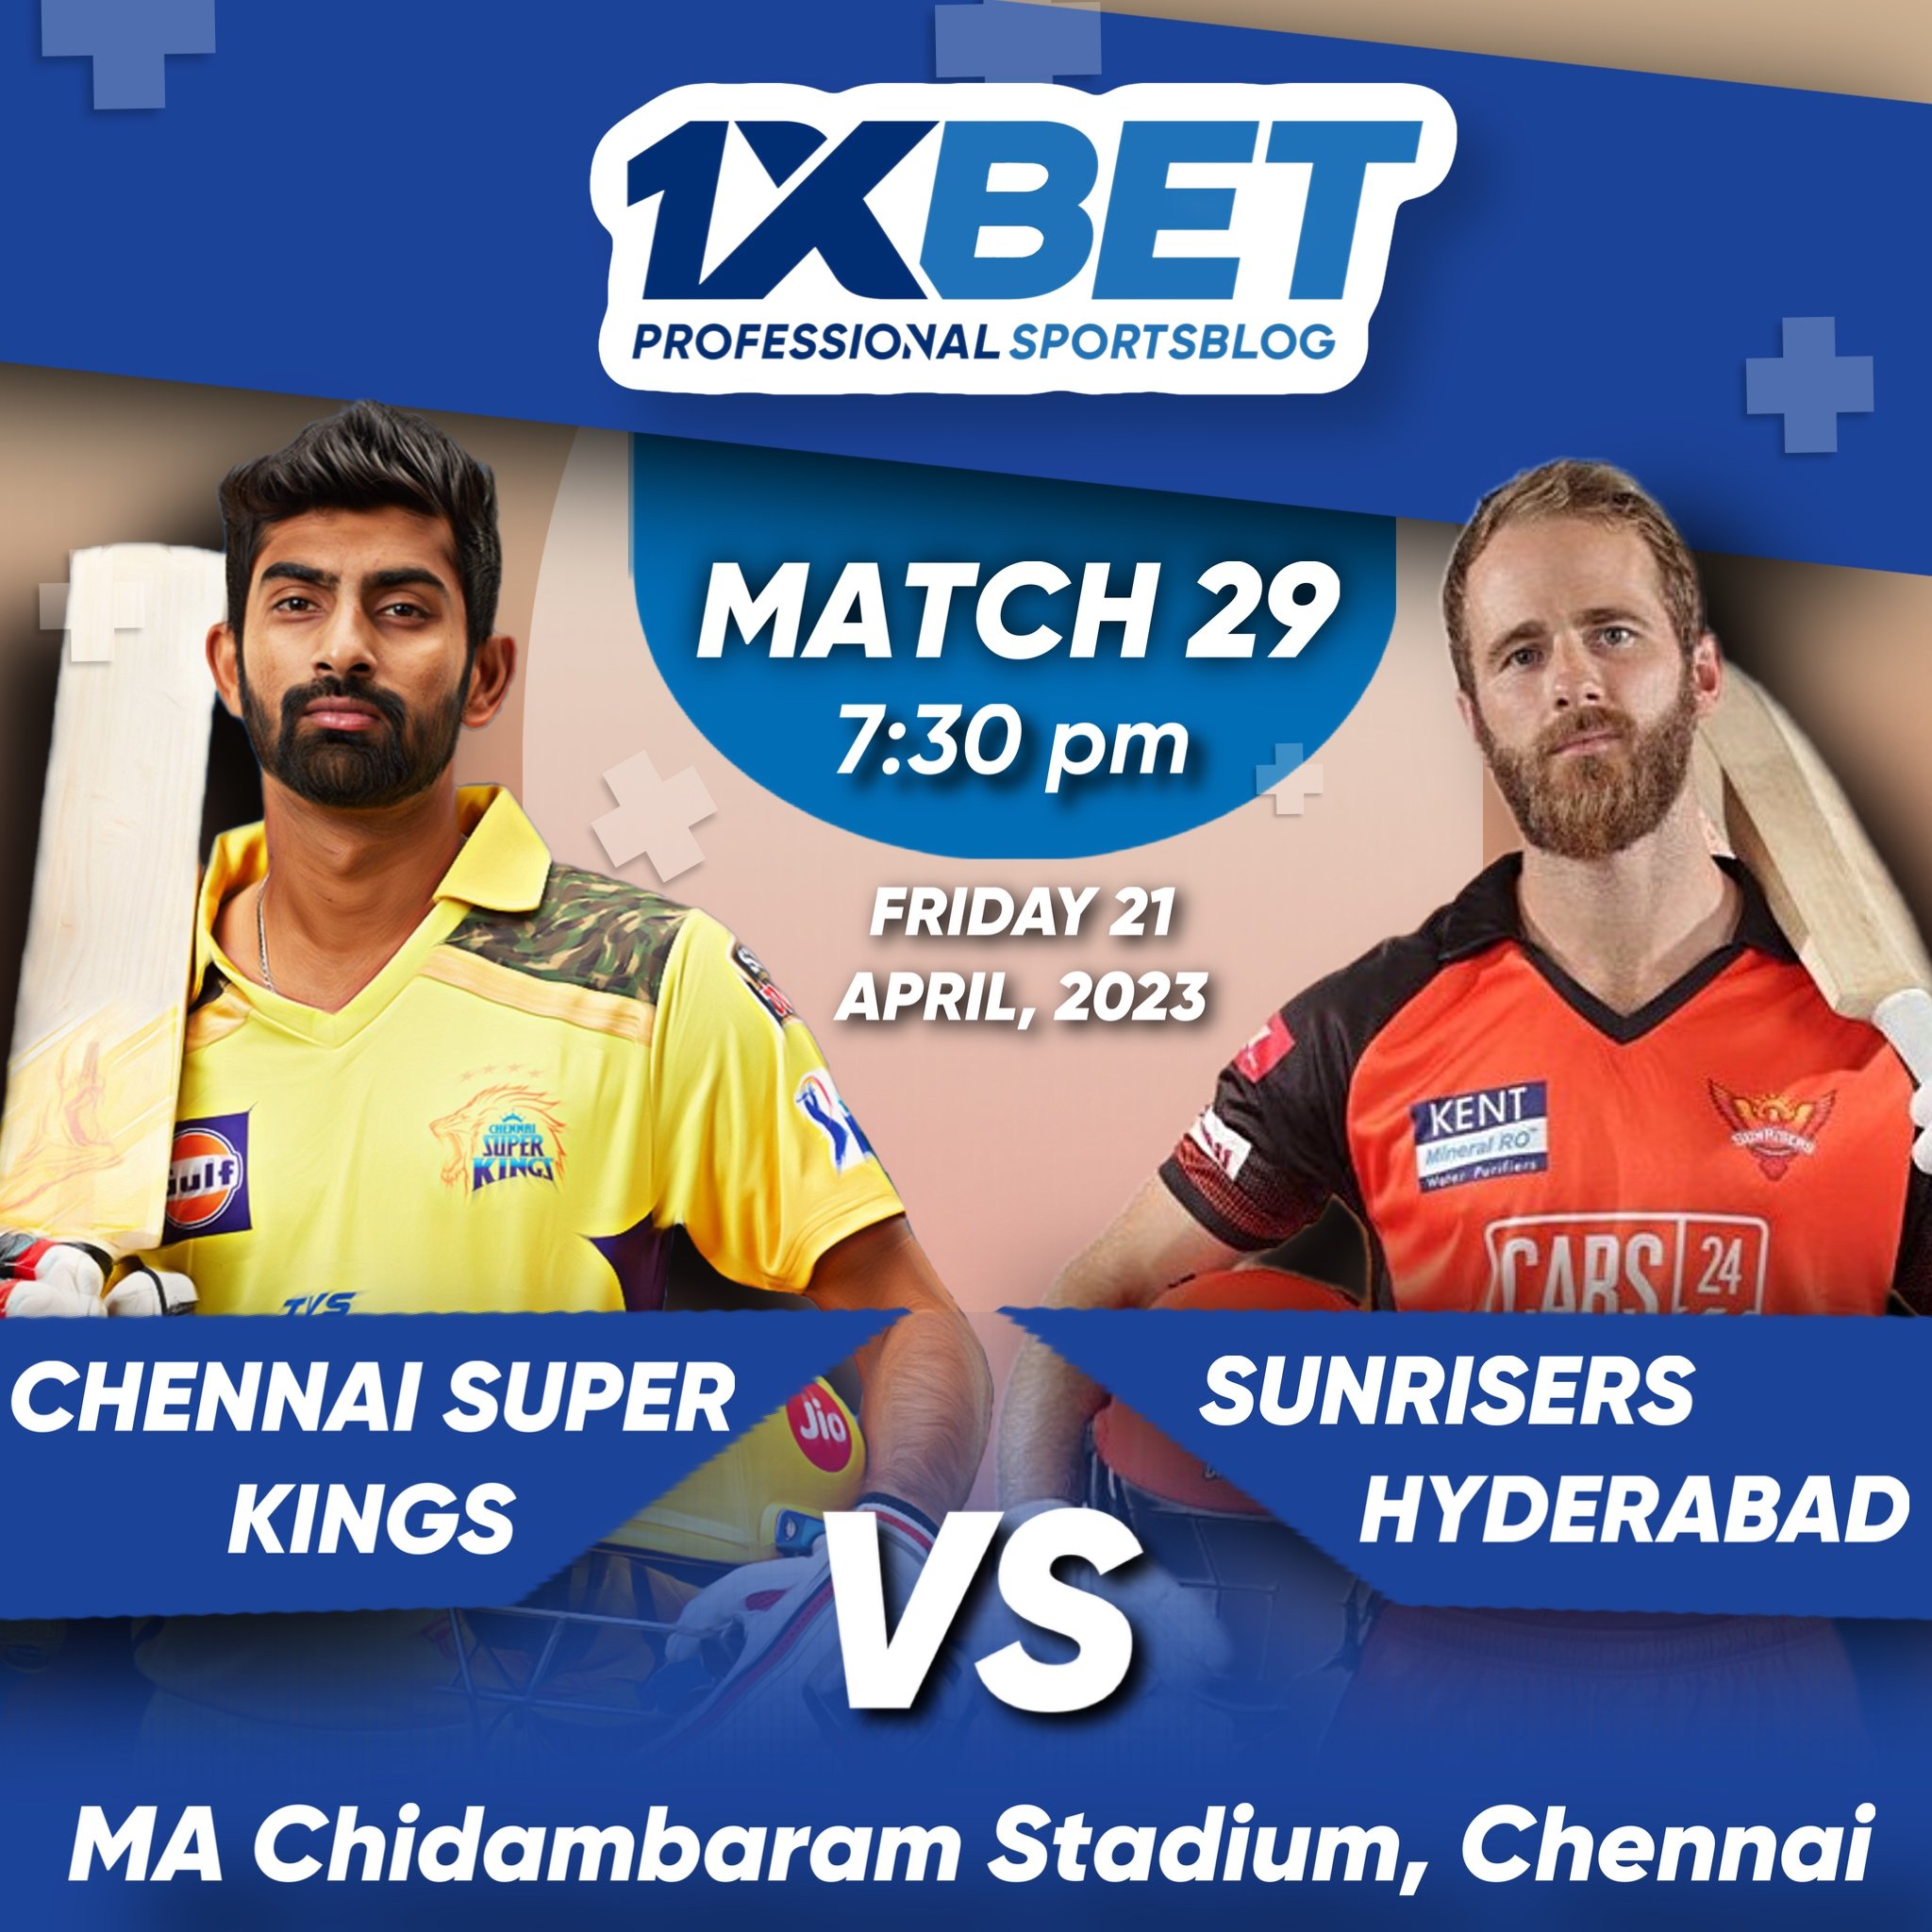 Sunrisers Hyderabad vs Chennai Super Kings, IPL 2023, 29th Match Analysis